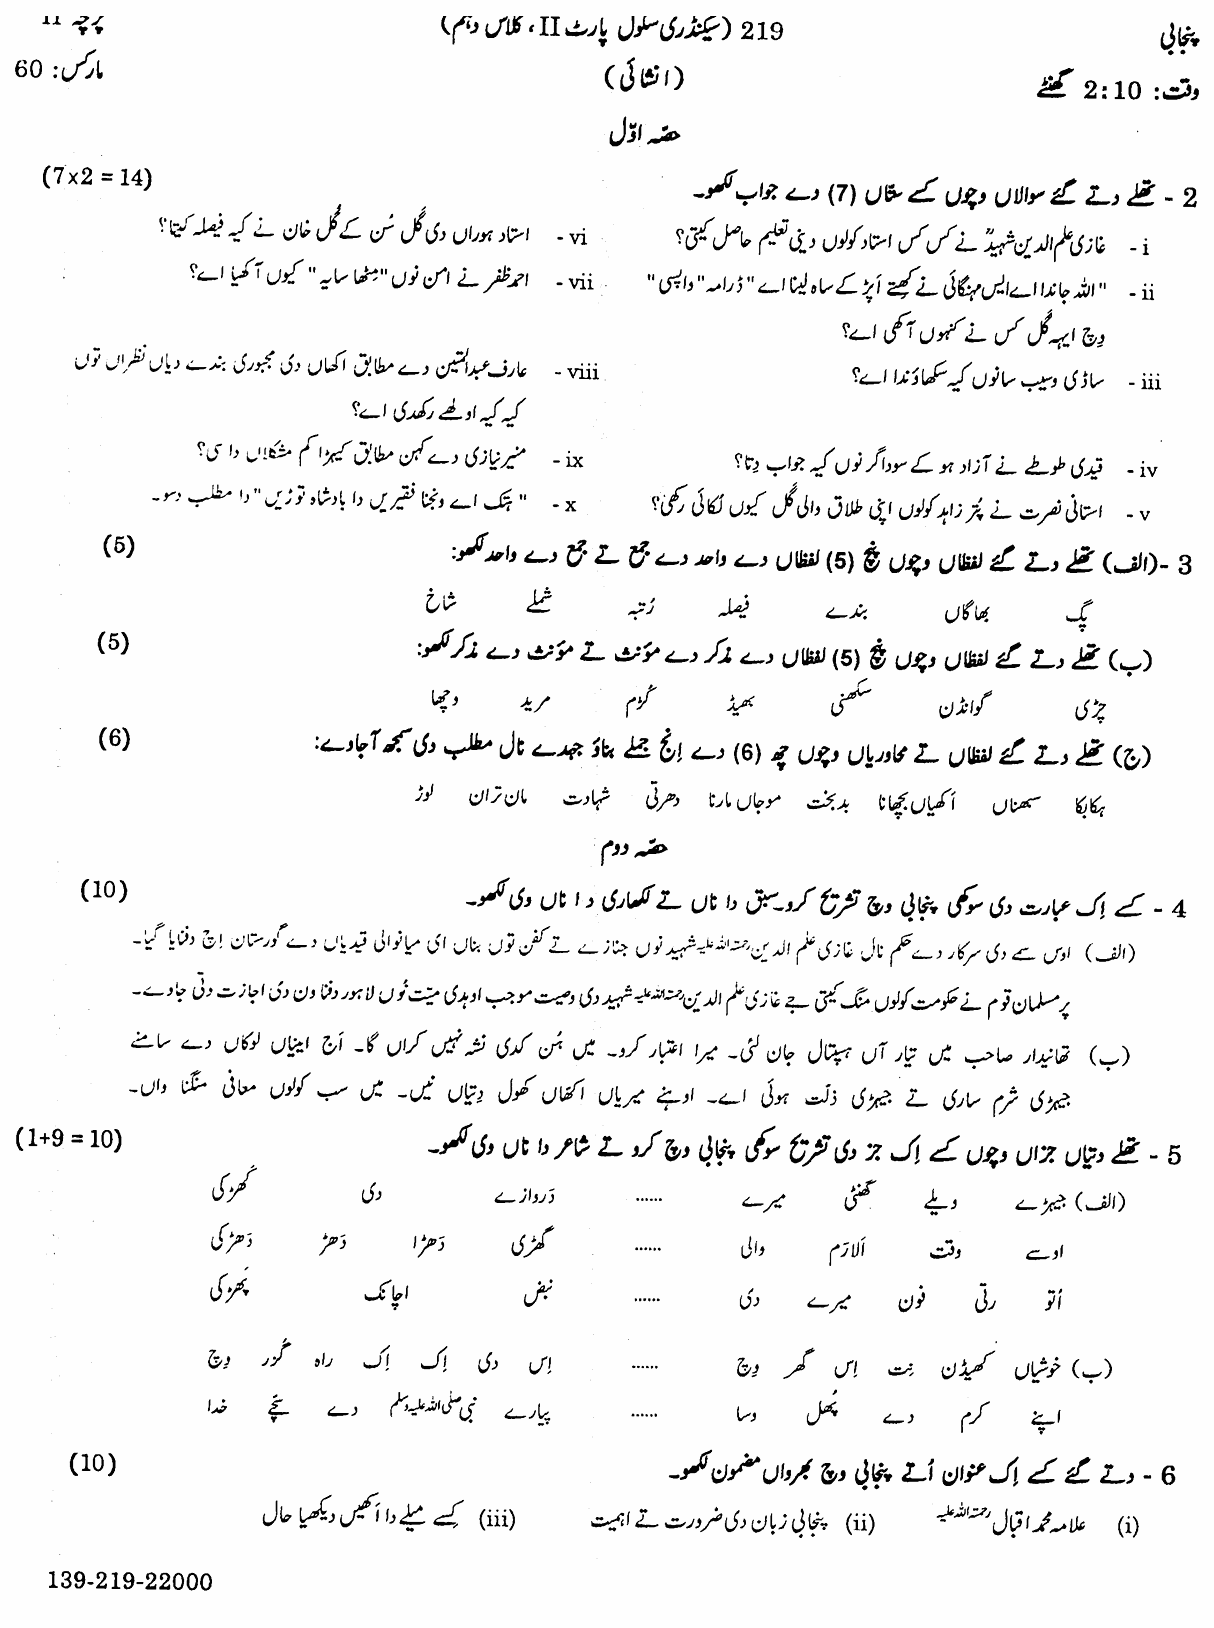 10th Class Punjabi Paper 2019 Gujranwala Board Subjective